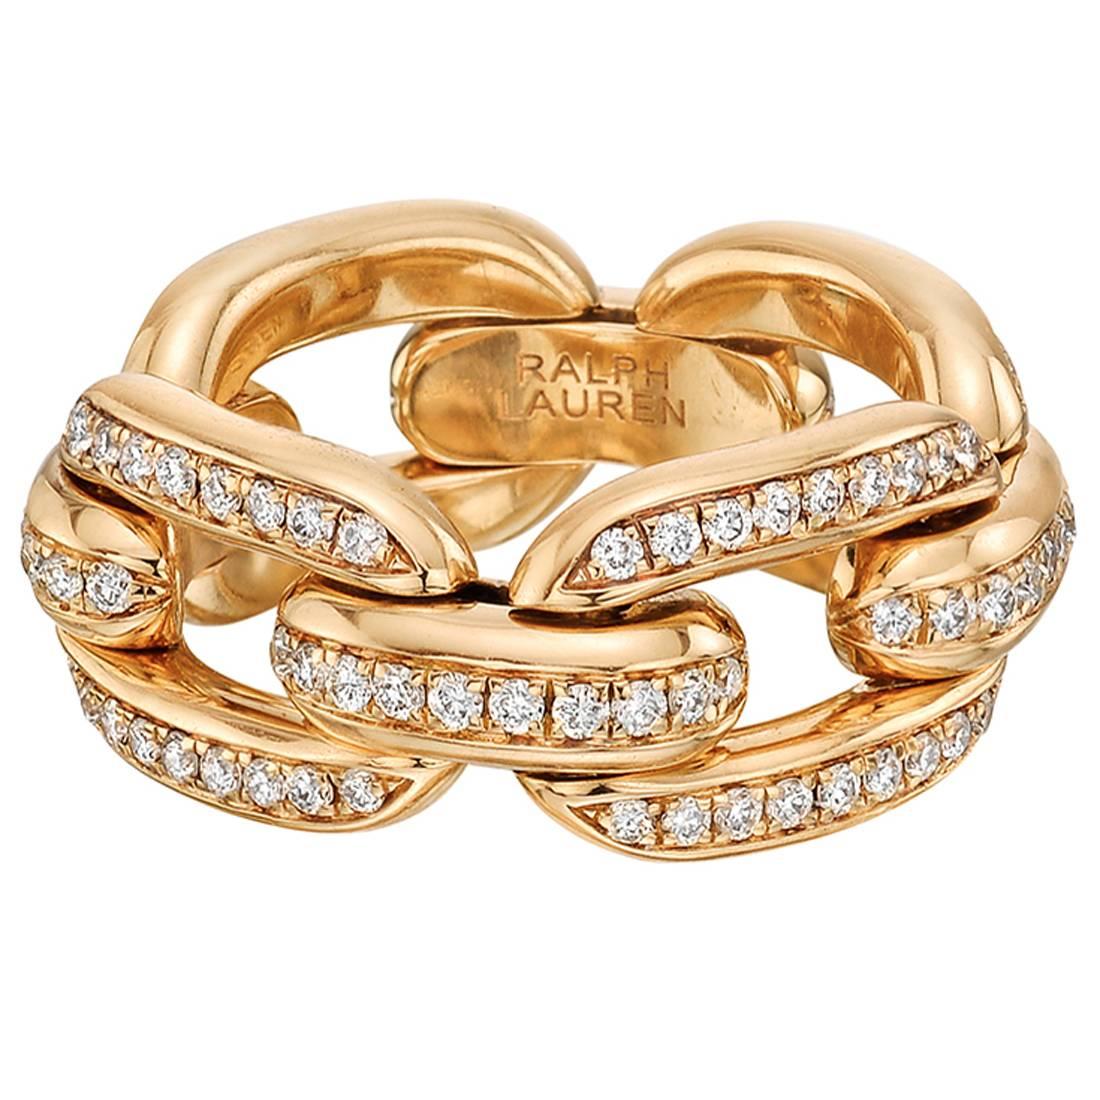 Ralph Lauren Diamond Gold Chunky Chain Ring